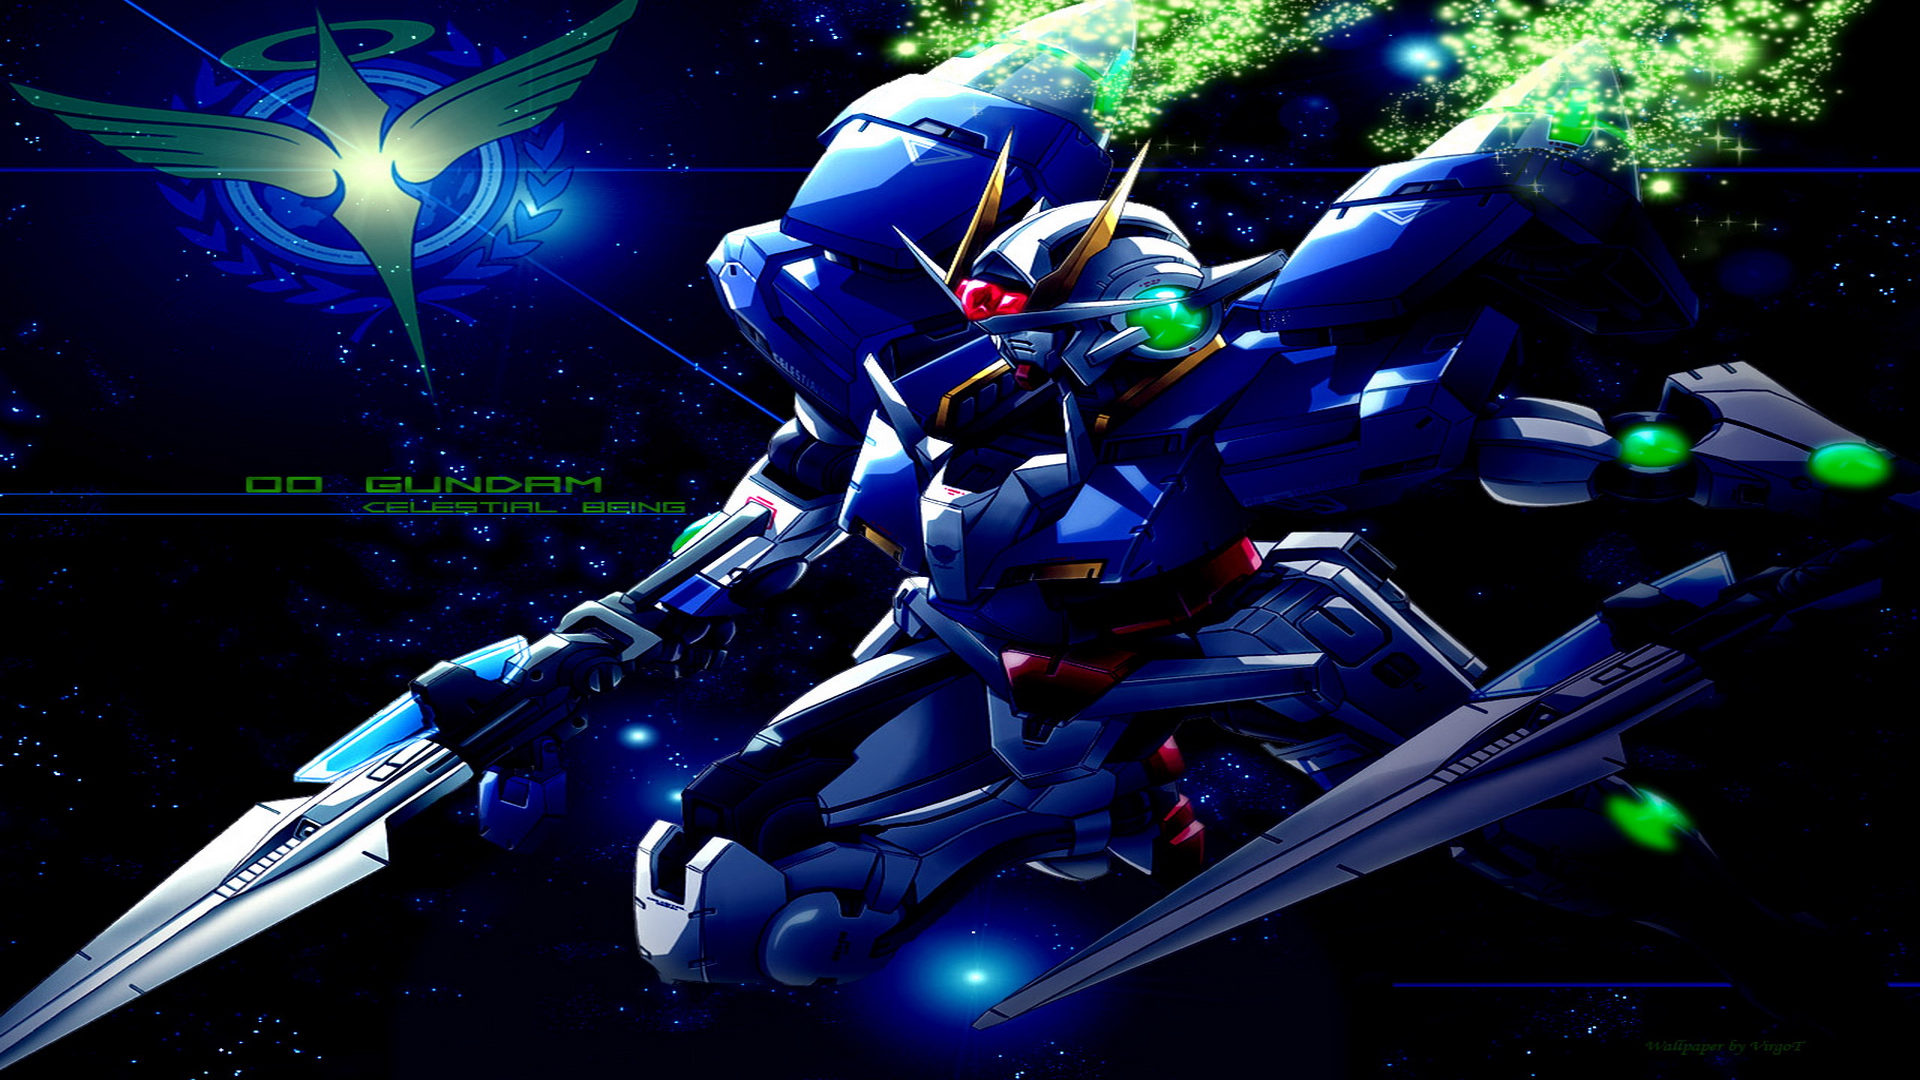 Pics Photos   Gundam Wallpaper Hd For Desktop